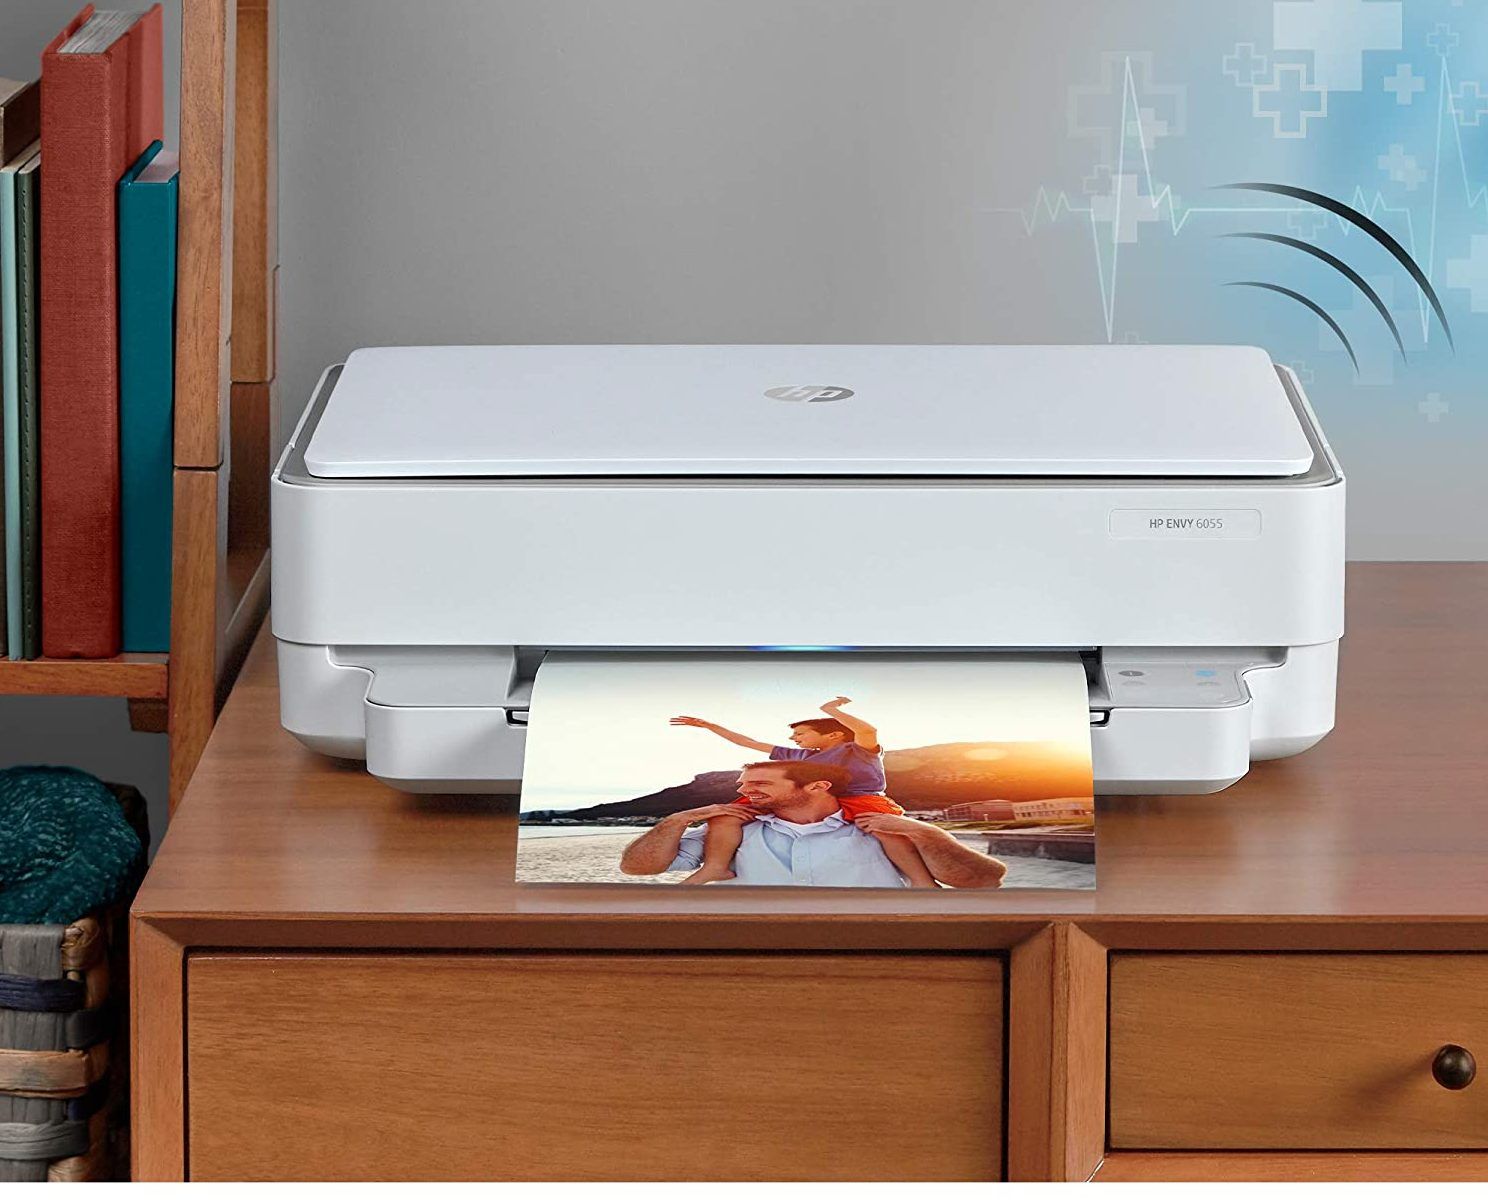 HP ENVY 6055 Wireless Printer-2